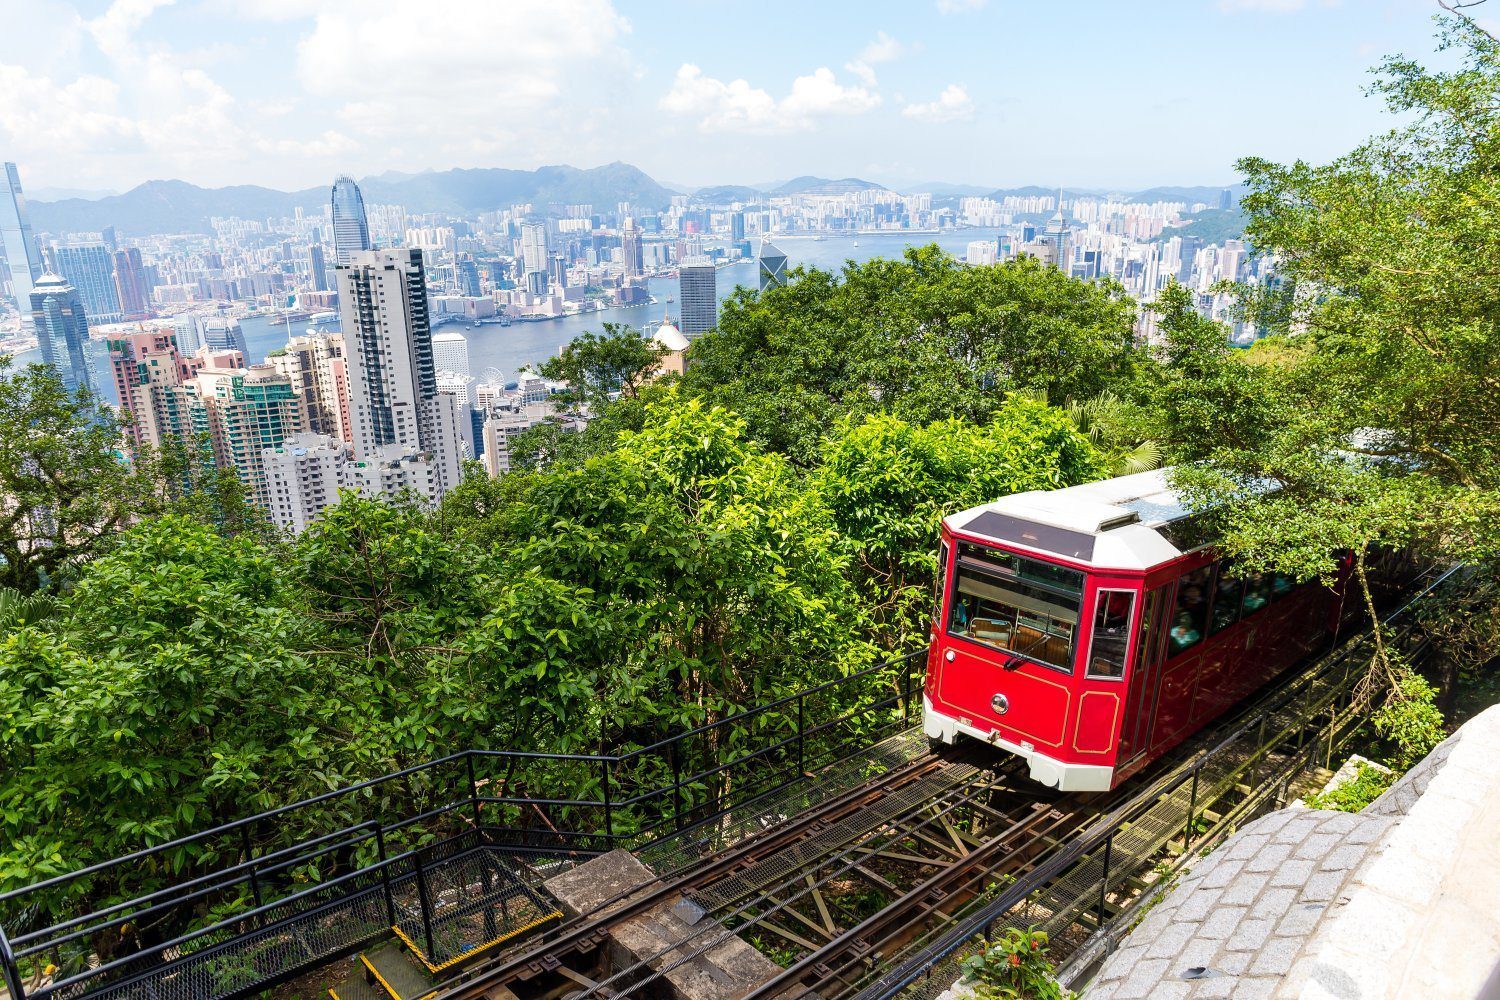 Victoria Peak Tram Tickets Hong Kong